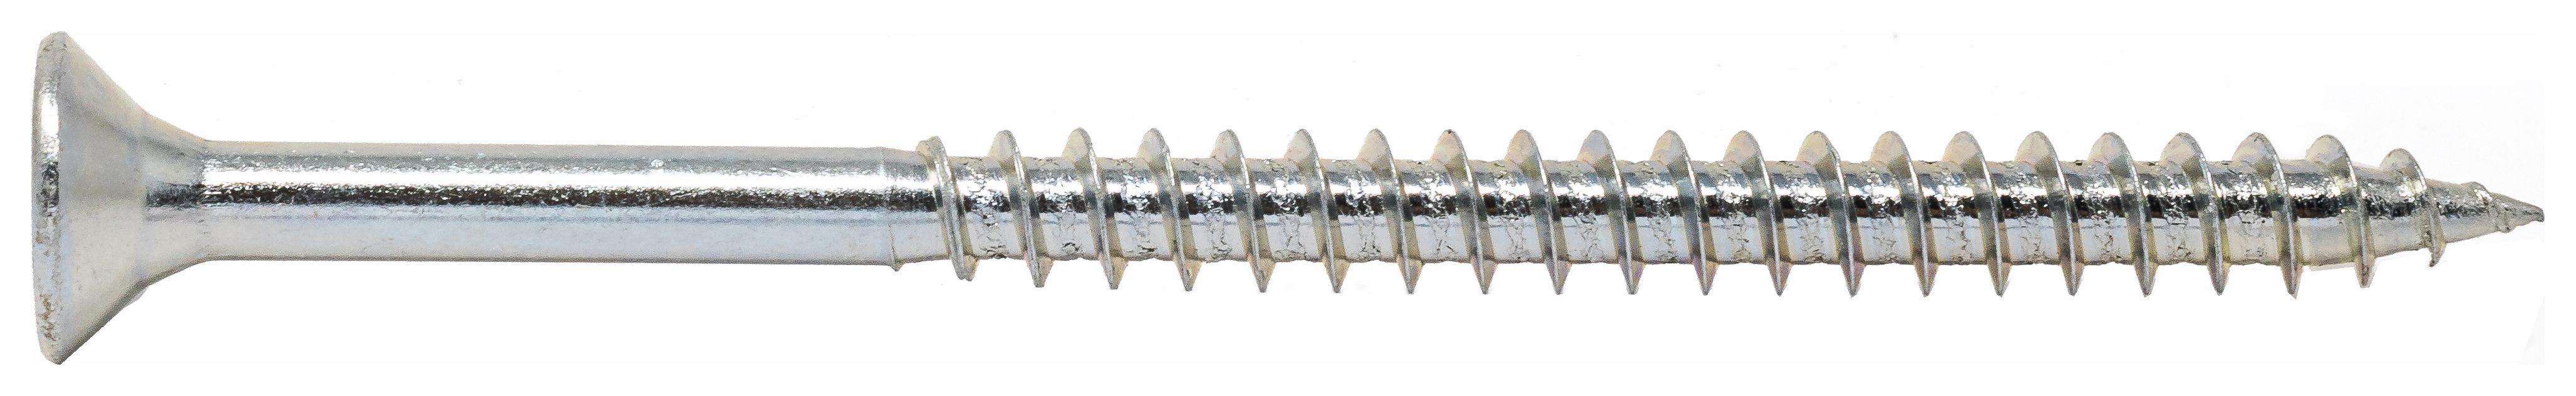 Wickes Single Thread Zinc Plated Screw - 5 X 50mm Pack Of 200